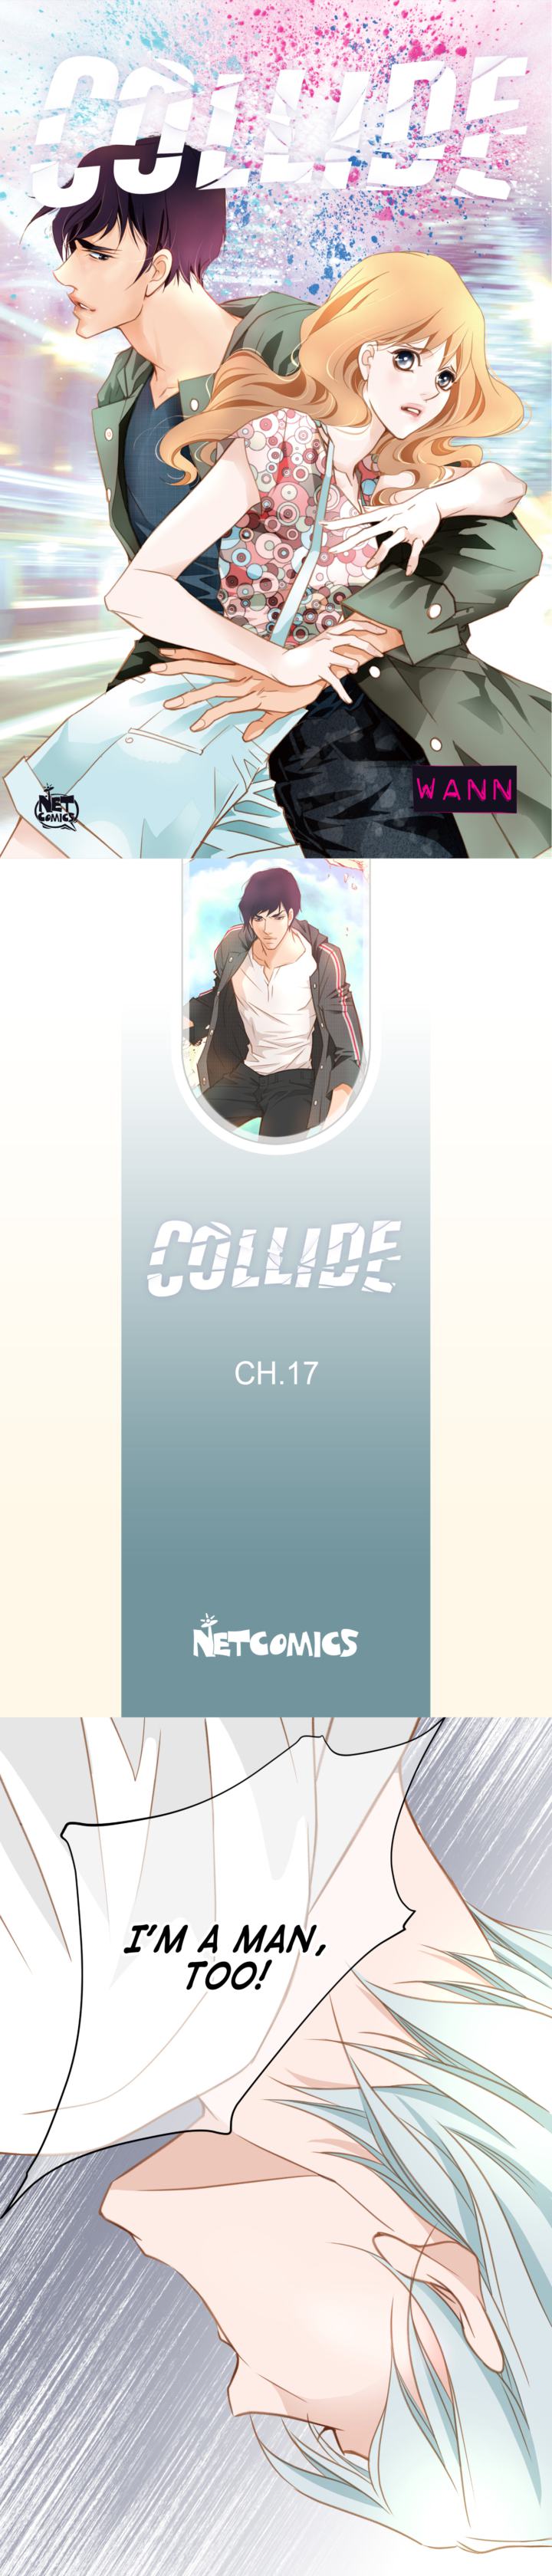 Collide Ch.17